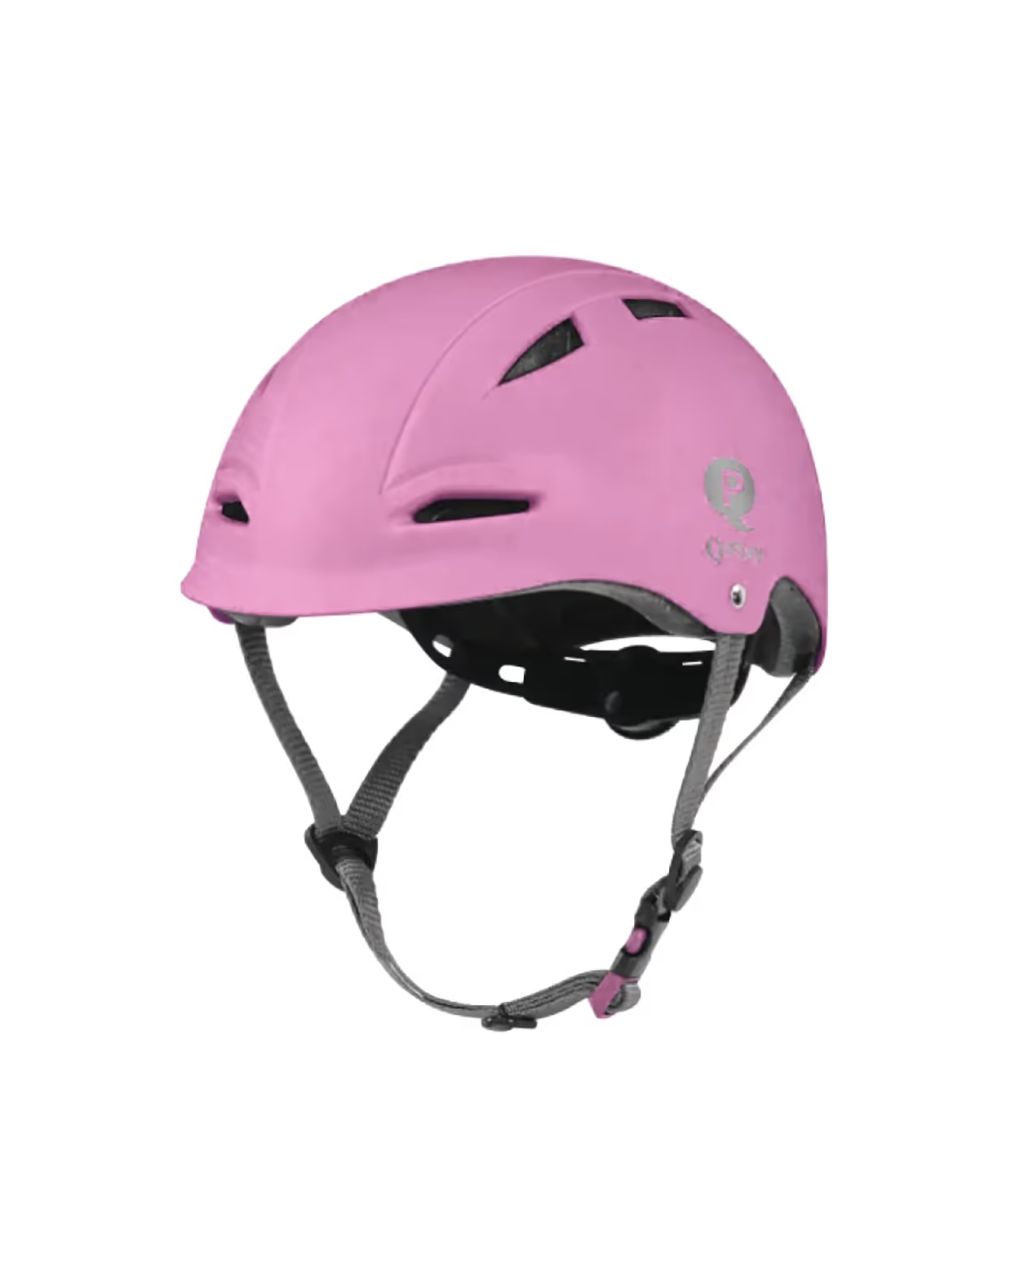 Qplay manbo παιδικό προστατευτικό κράνος για ποδήλατο-scooter πατίνι ροζ